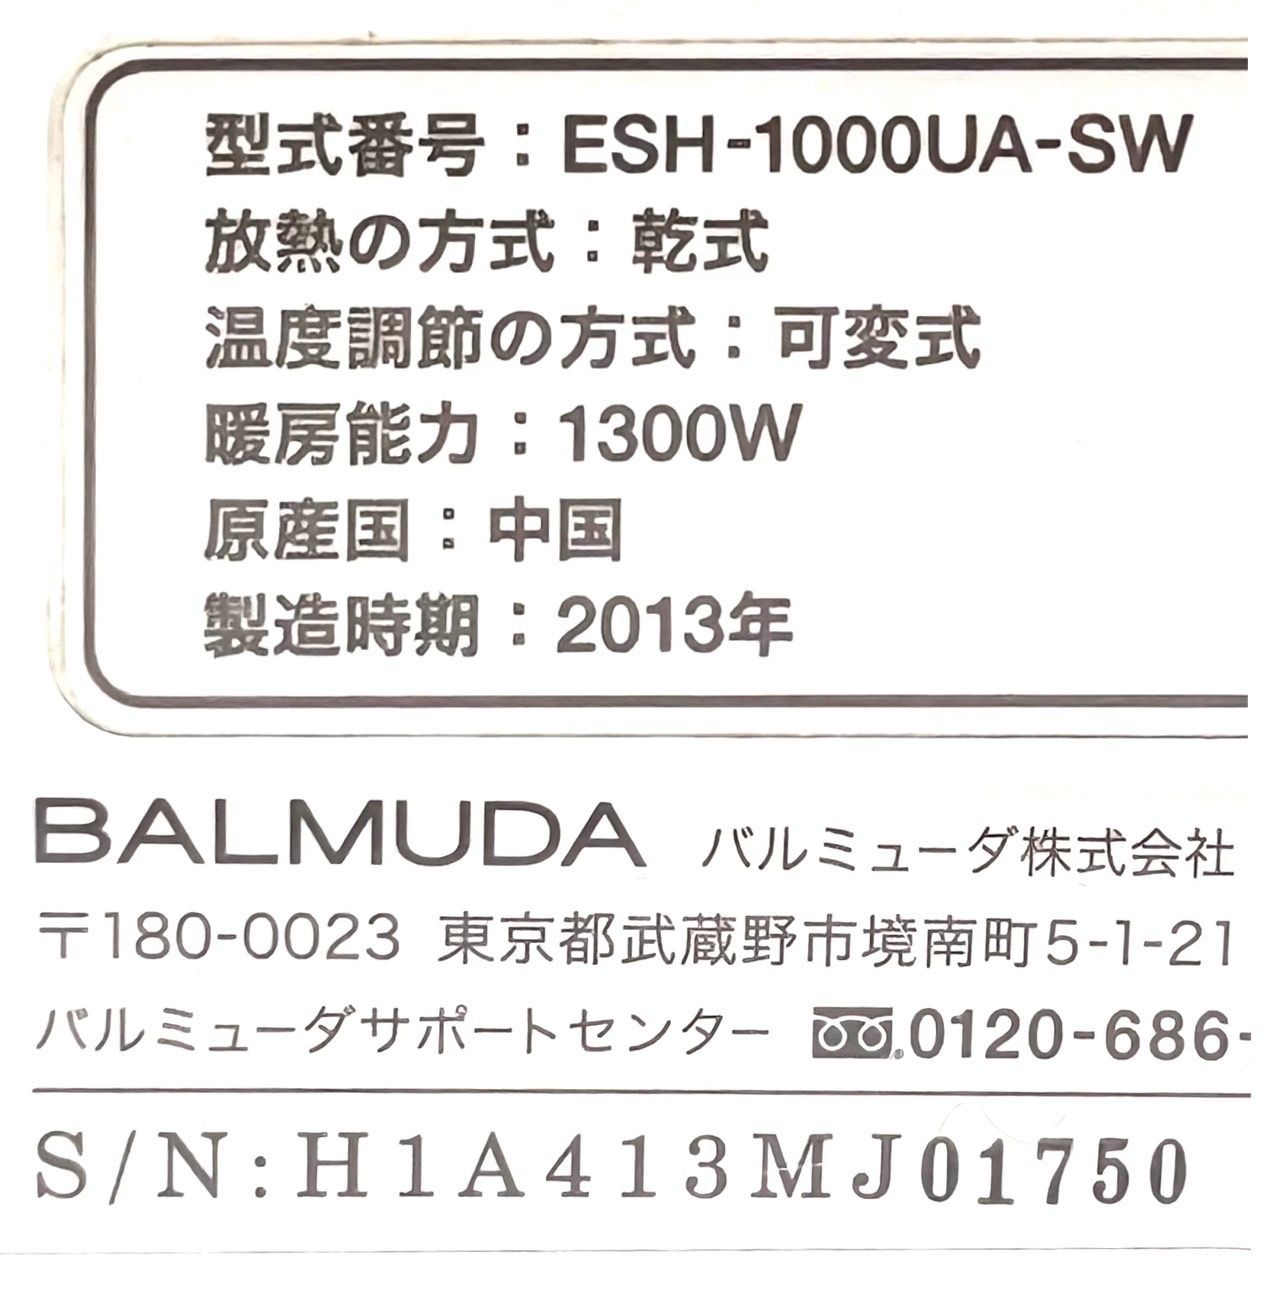 BALMUDA ESH-1000UA-SW スマートヒーター 2013年製